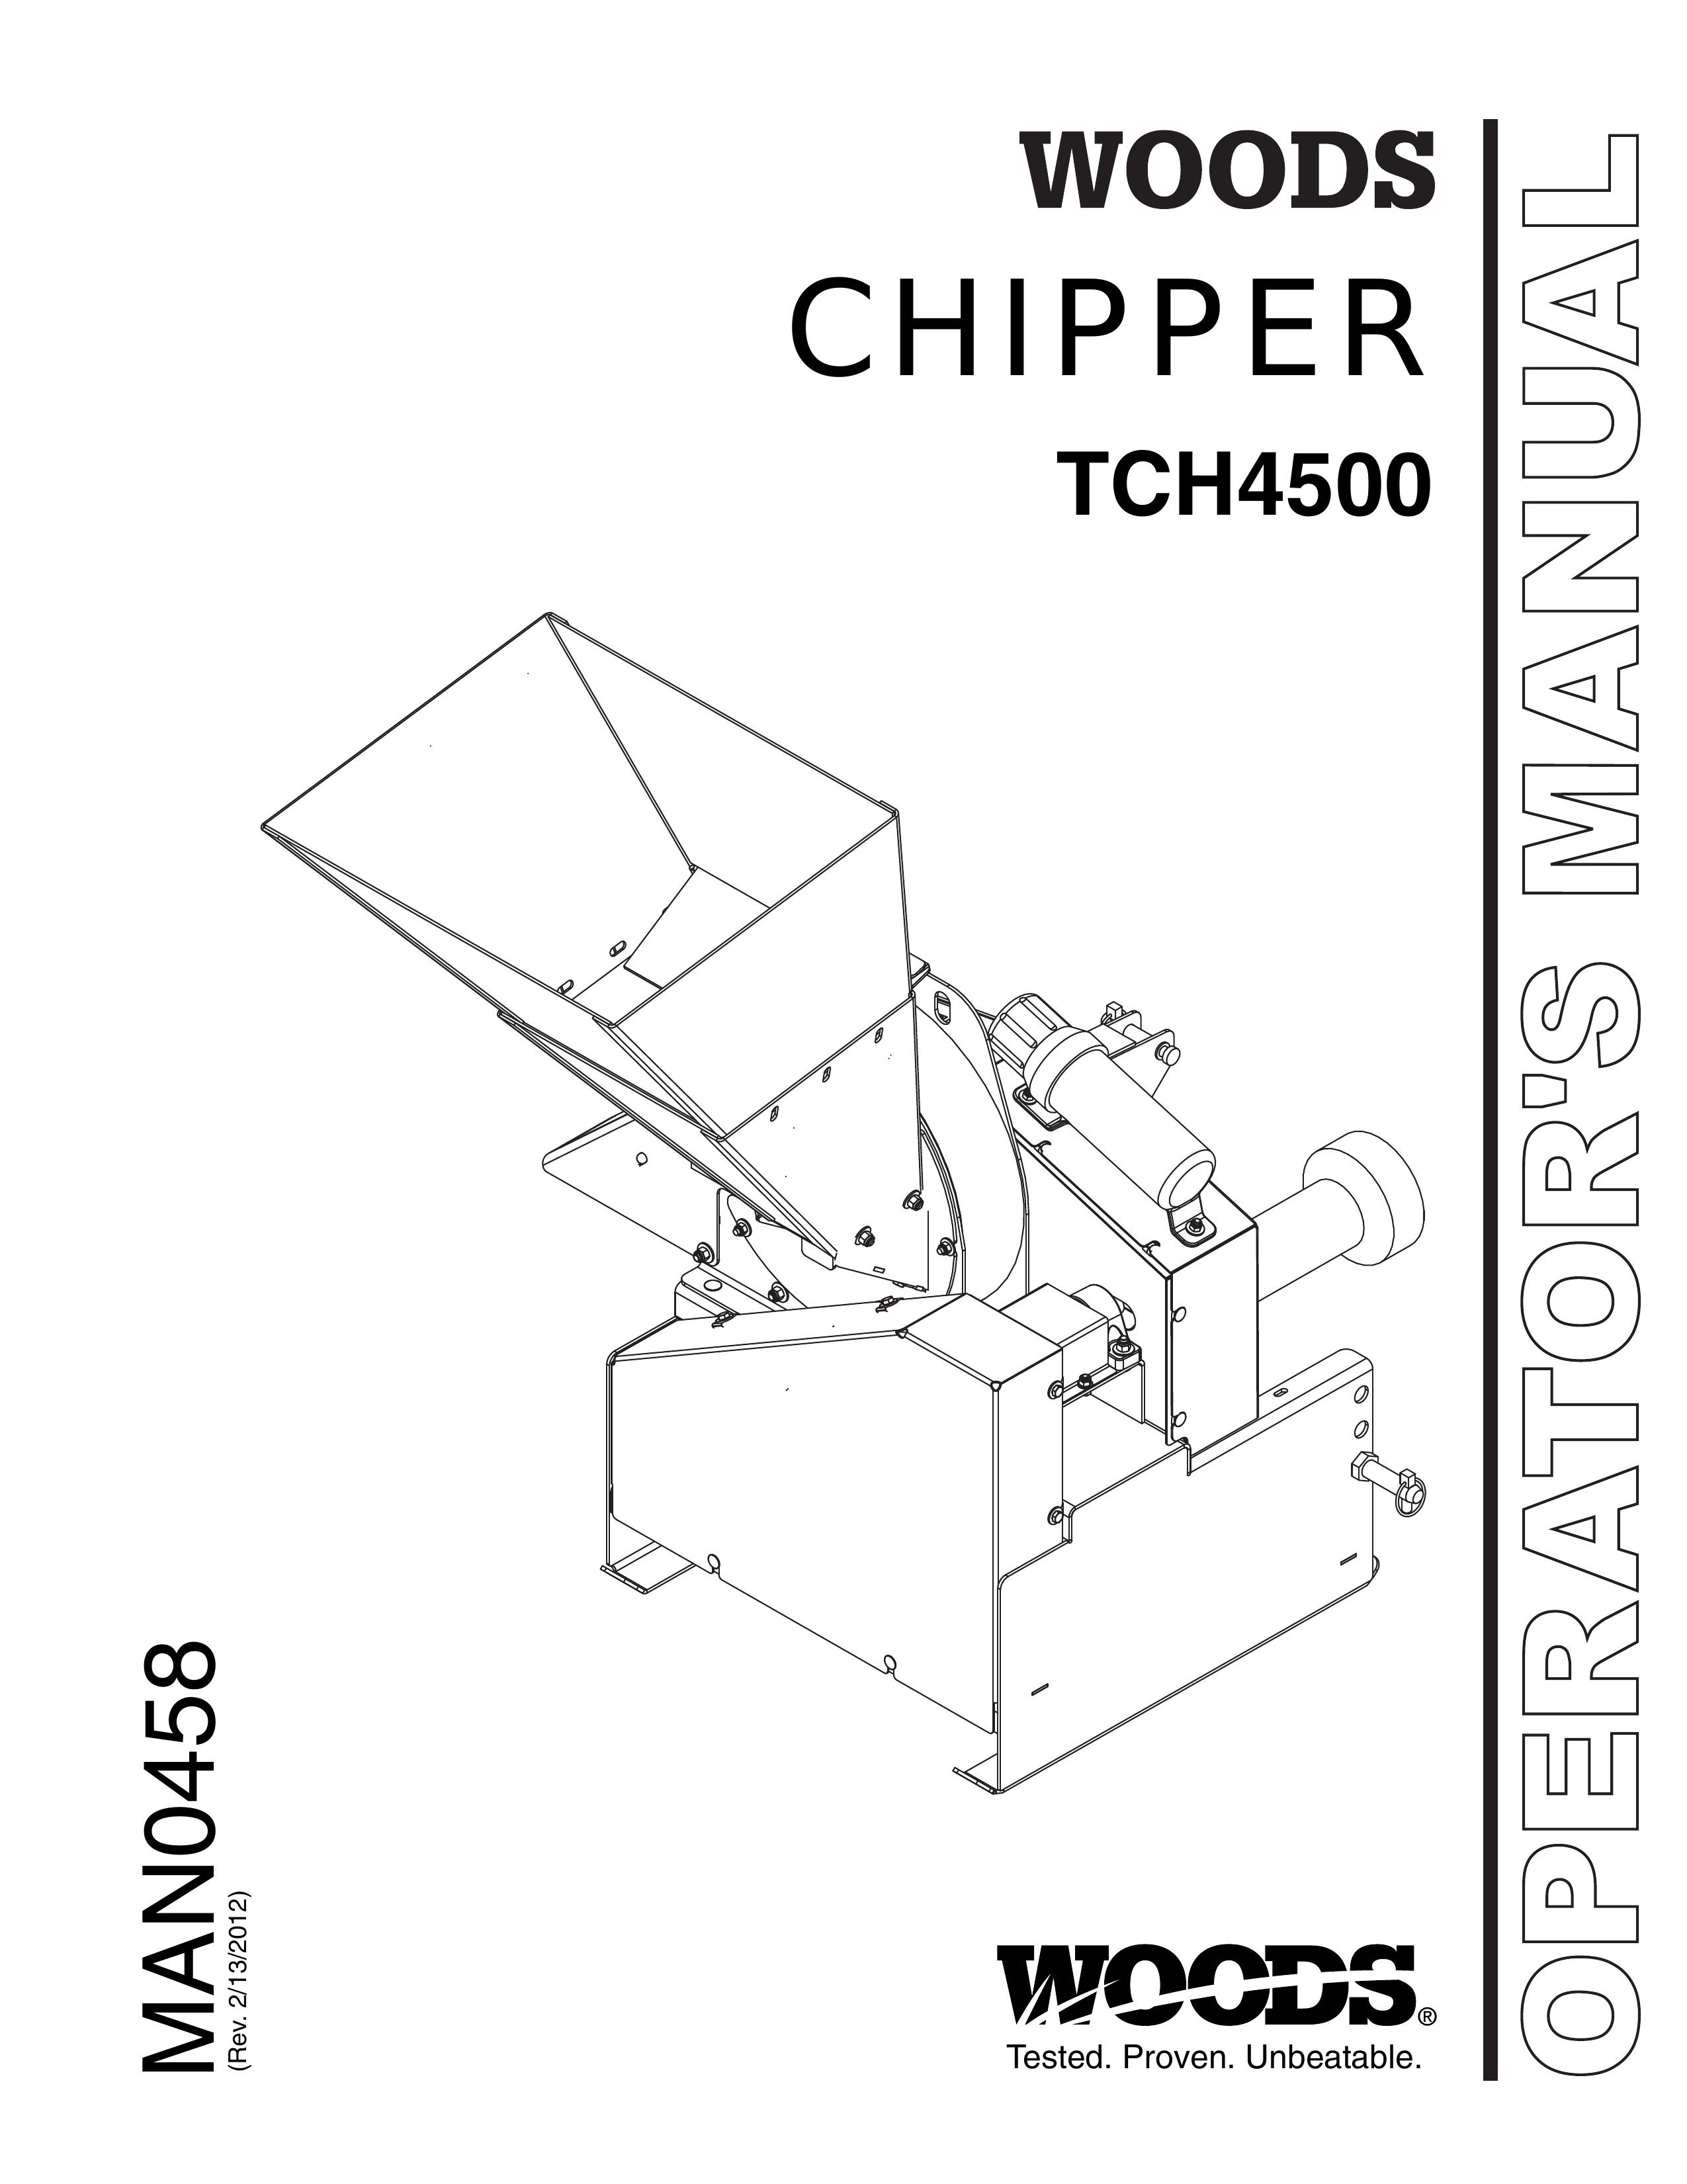 Woods Equipment TCH4500 Chipper User Manual